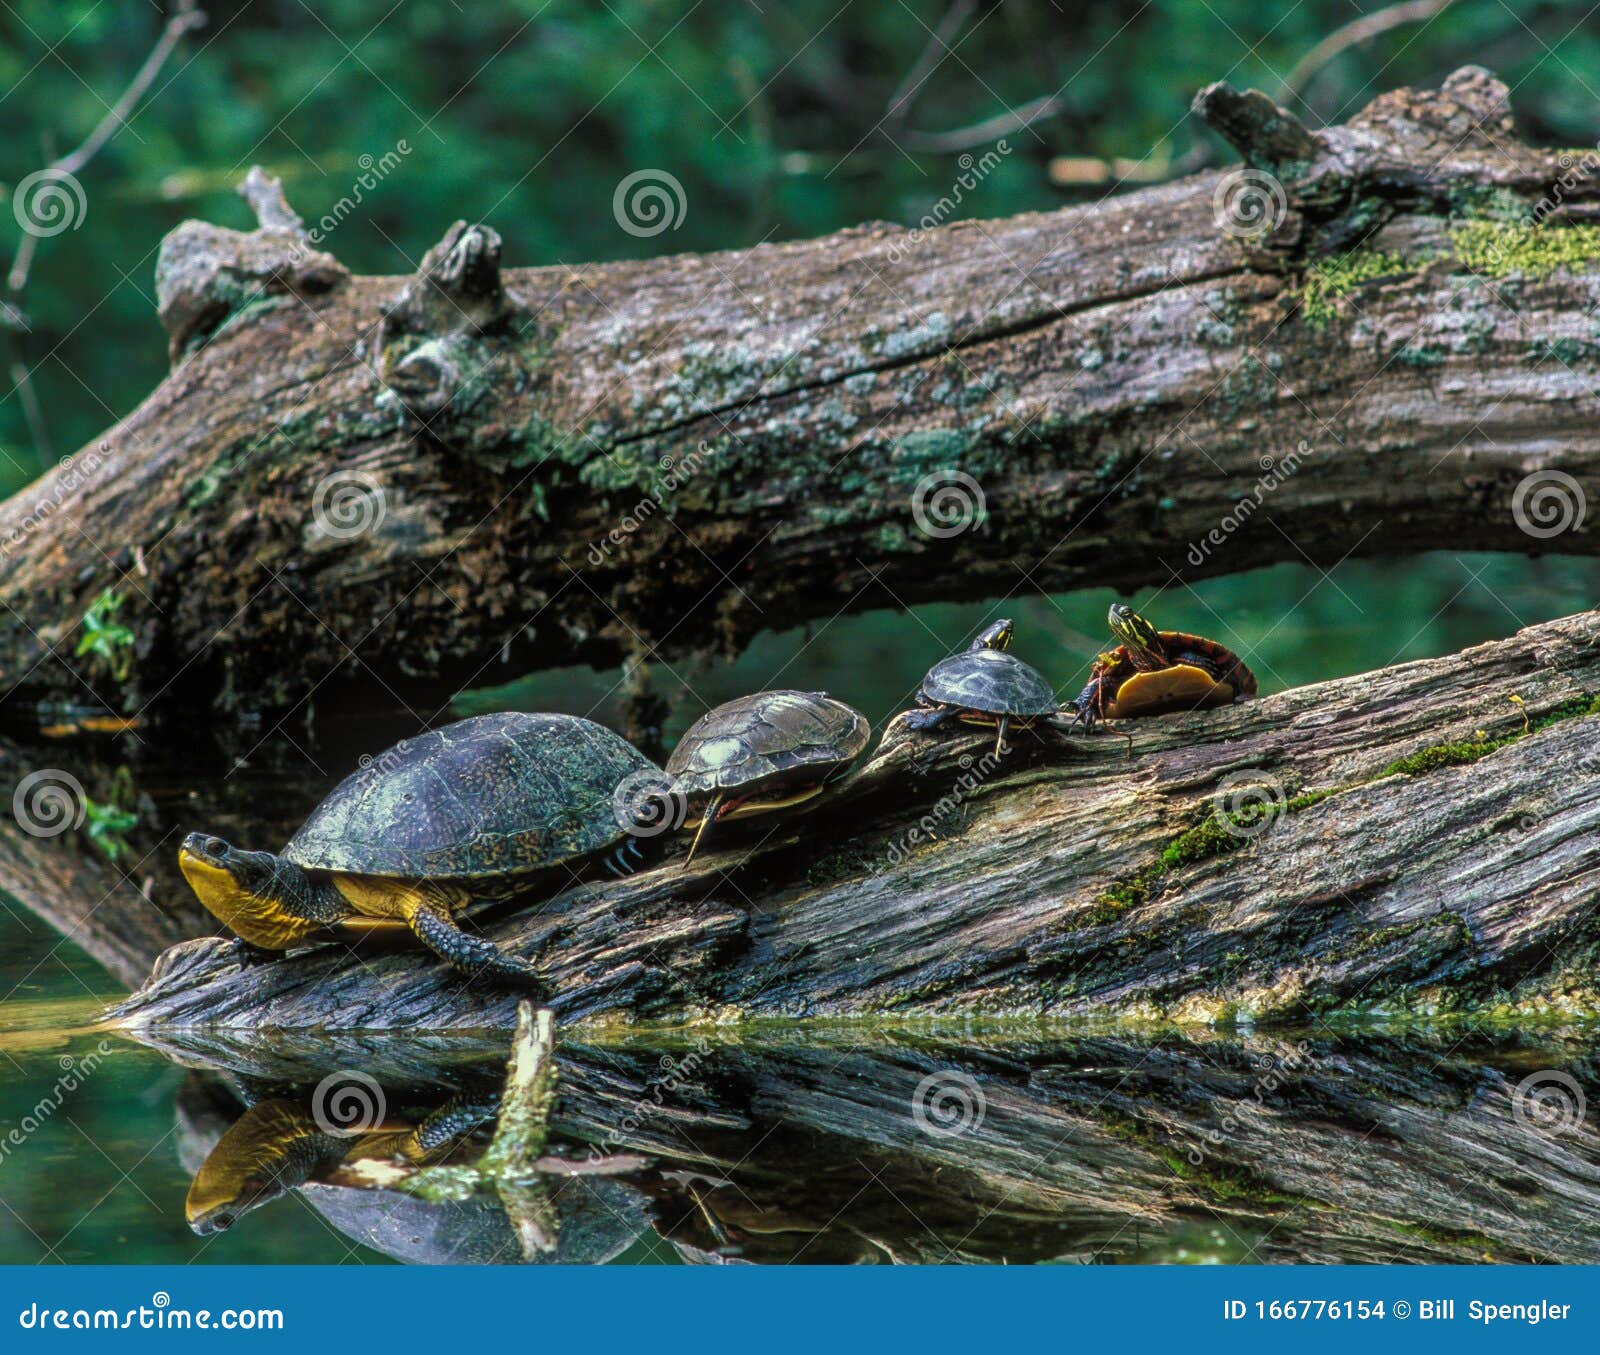 four turtles share a log